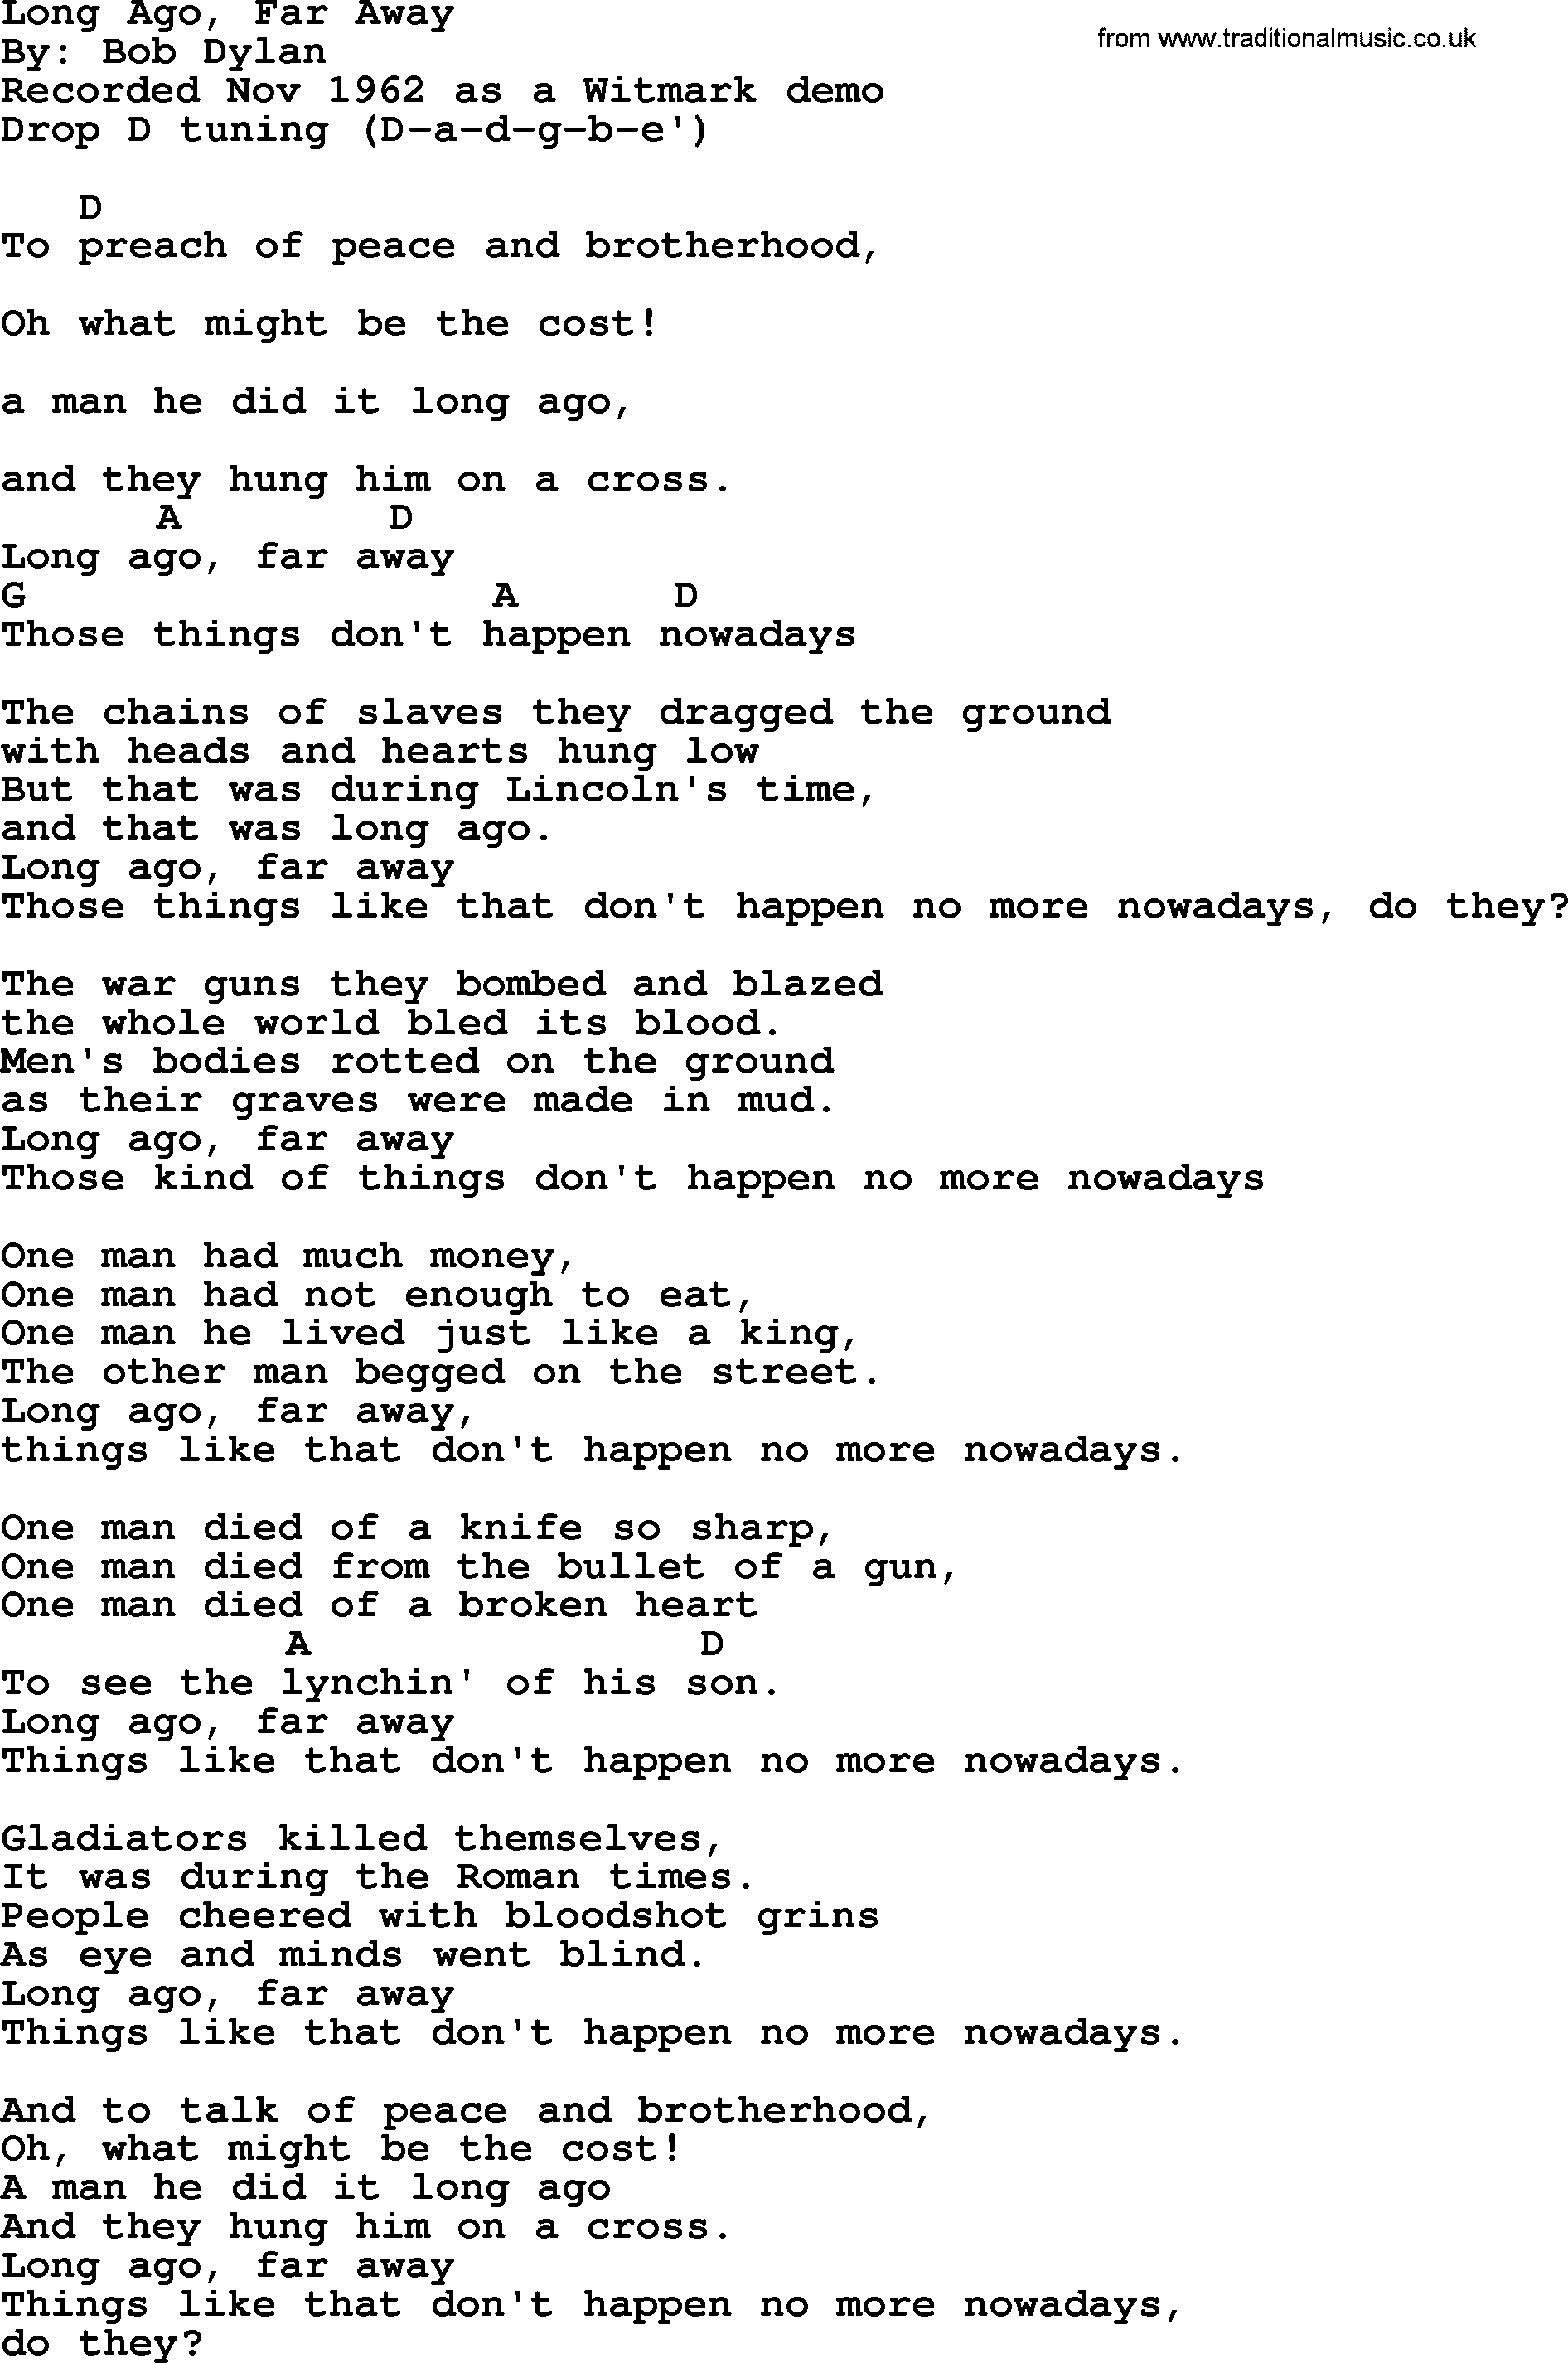 Bob Dylan song, lyrics with chords - Long Ago, Far Away